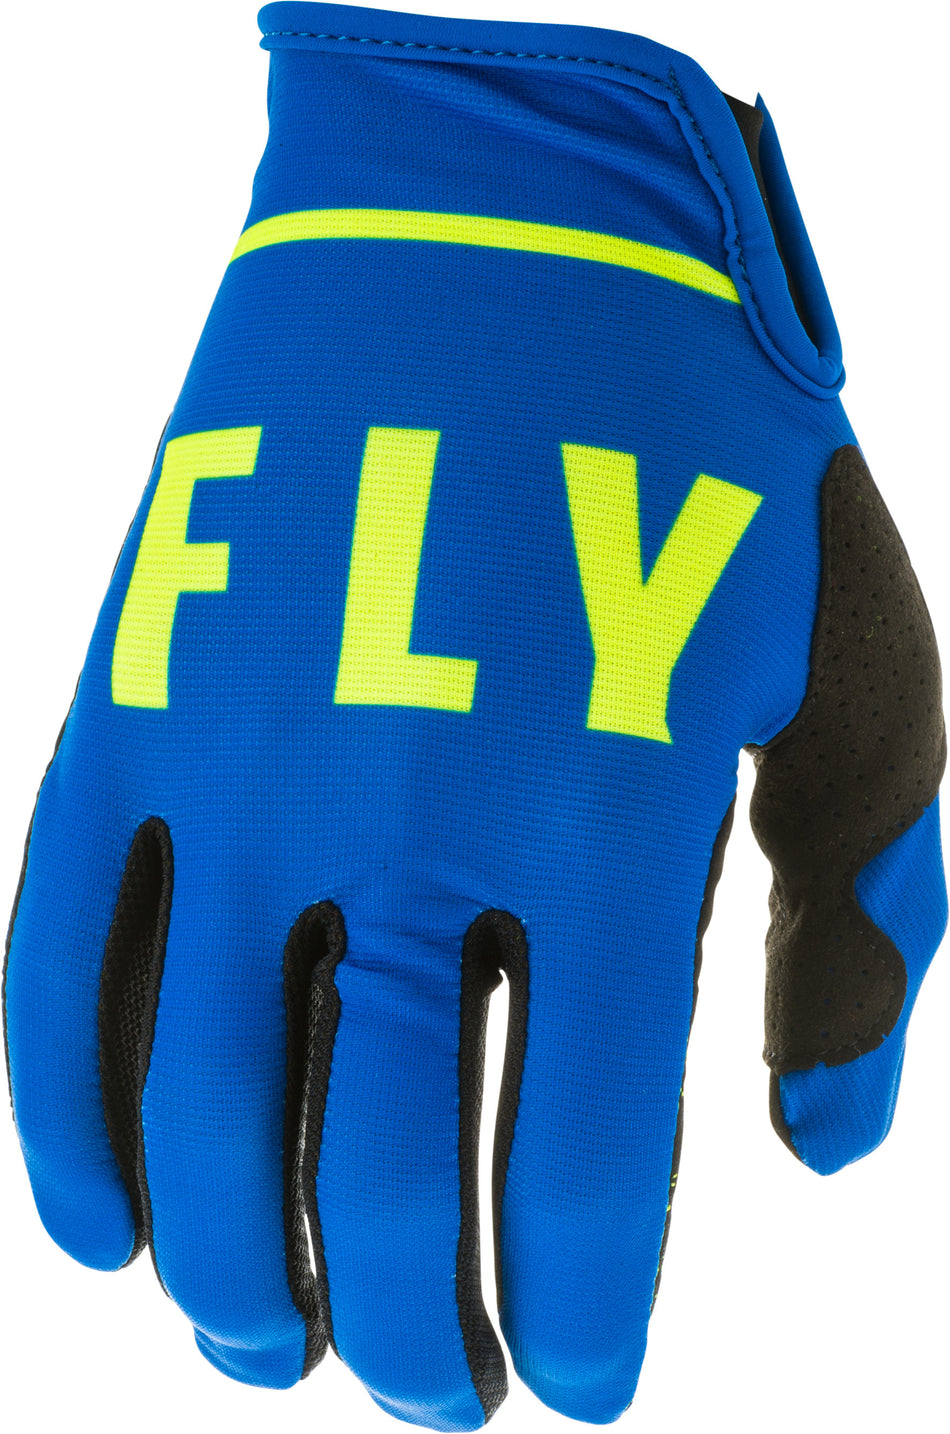 FLY RACING Lite Gloves Blue/Black/Hi-Vis Sz 13 373-71013